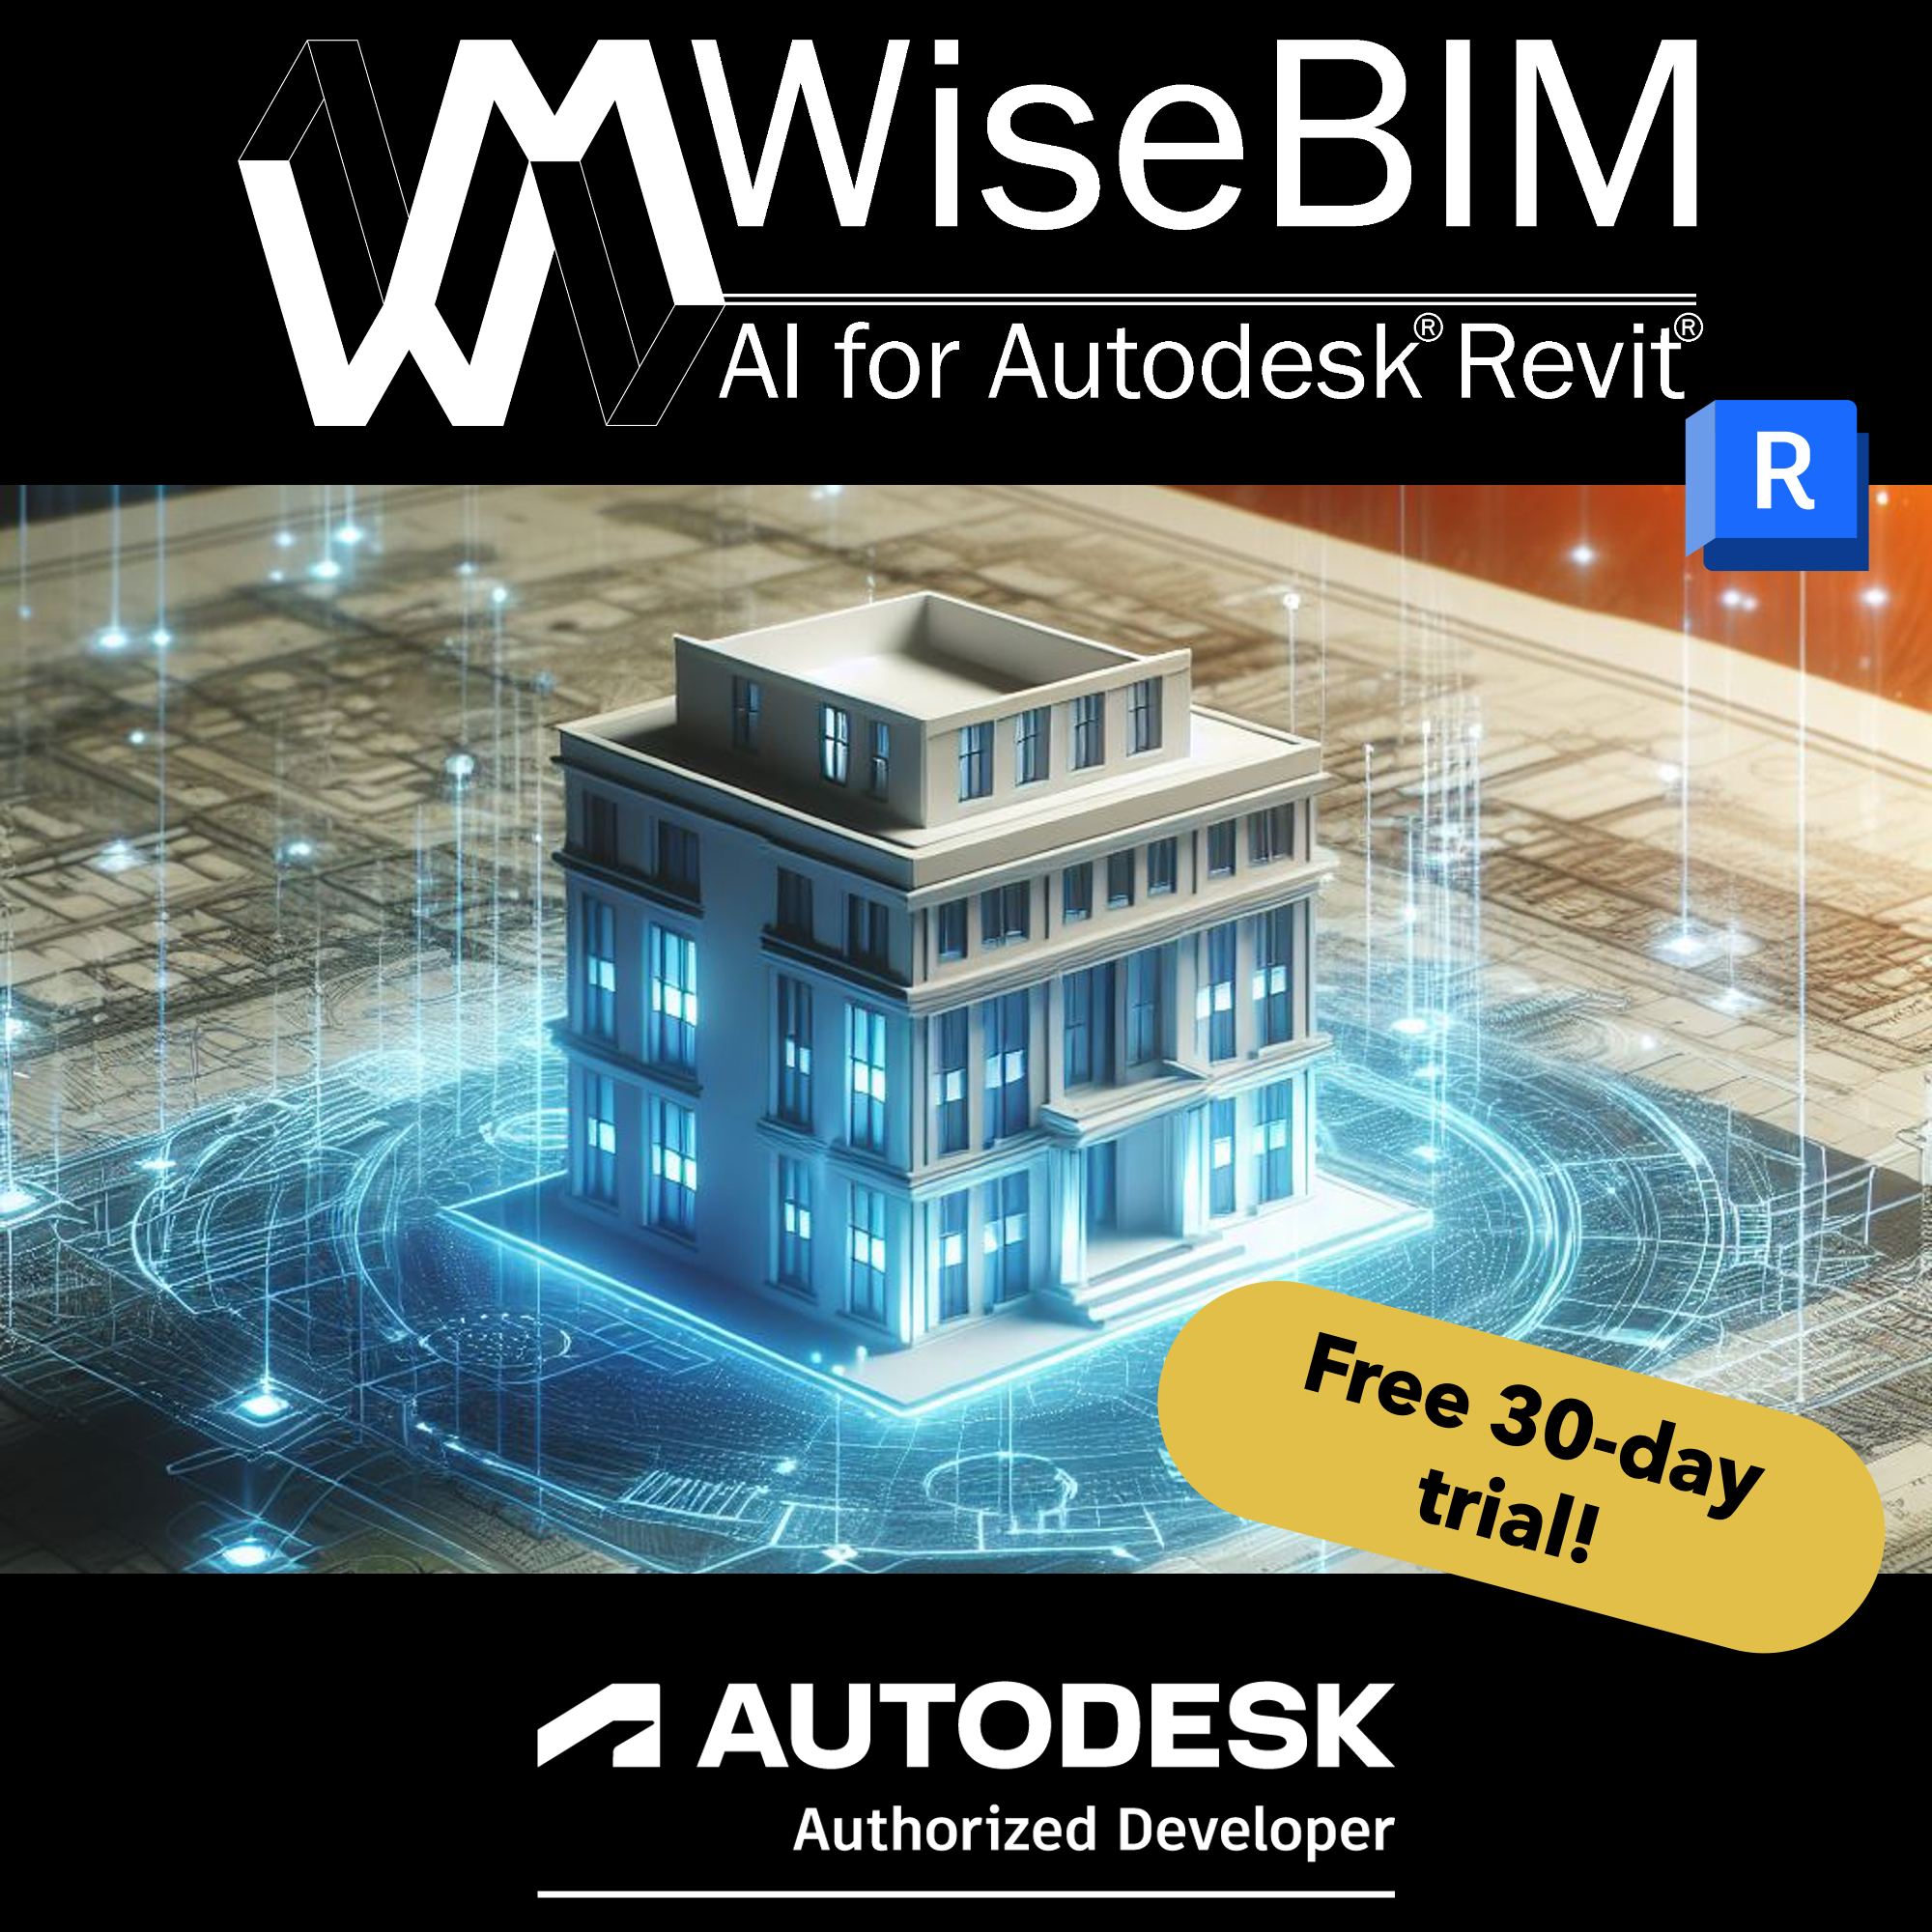 Discover WiseBIM for Autodesk® Revit® in video